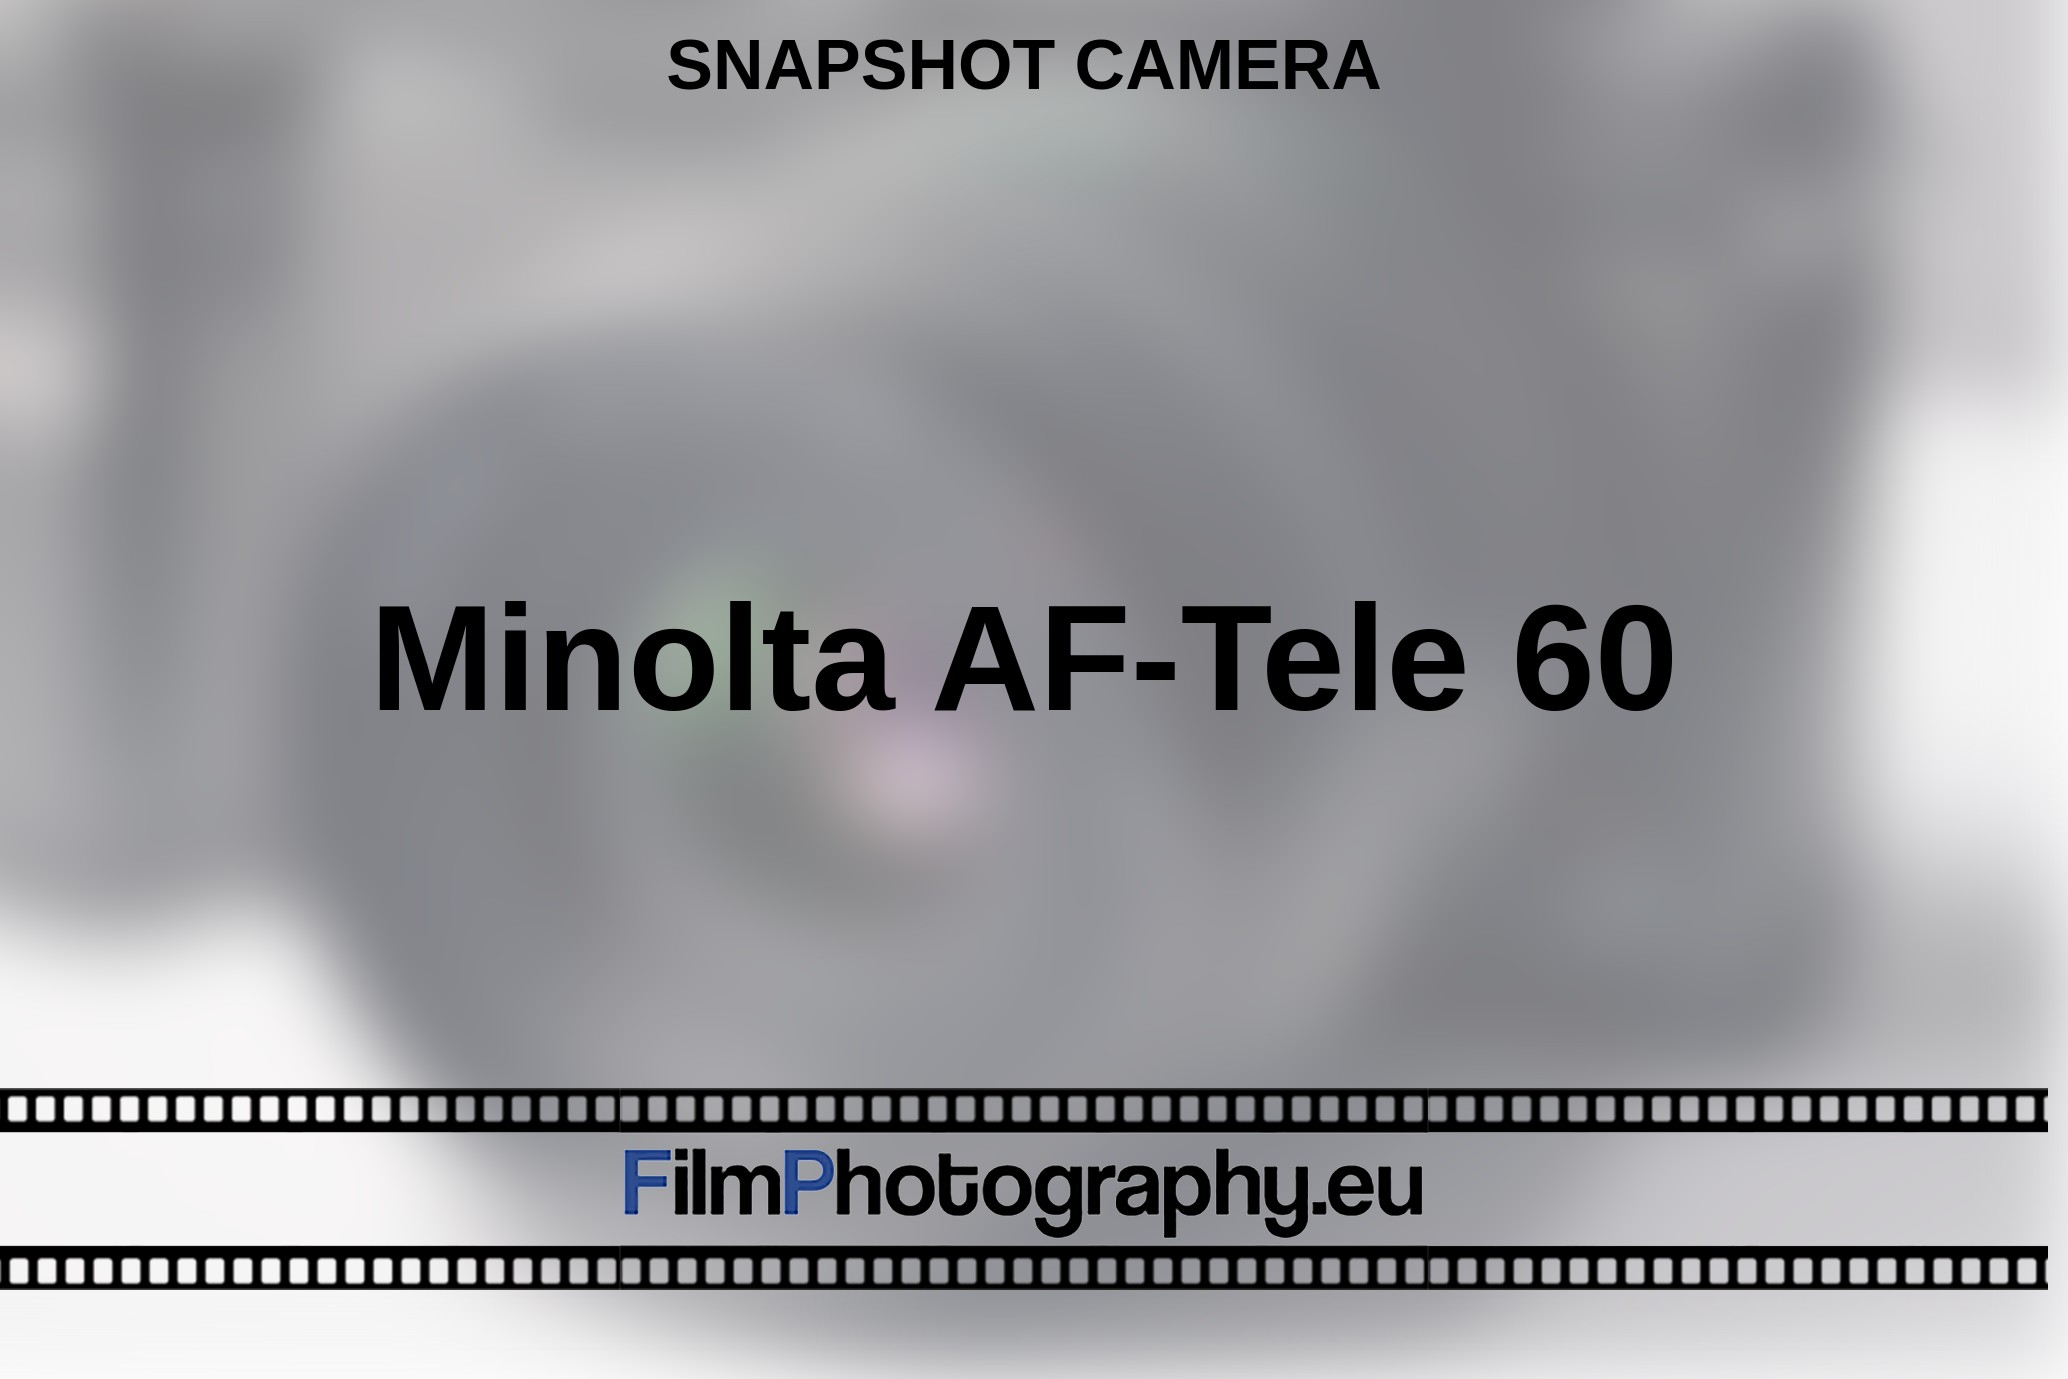 Minolta-AF-Tele-60-snapshot-camera-bnv.jpg